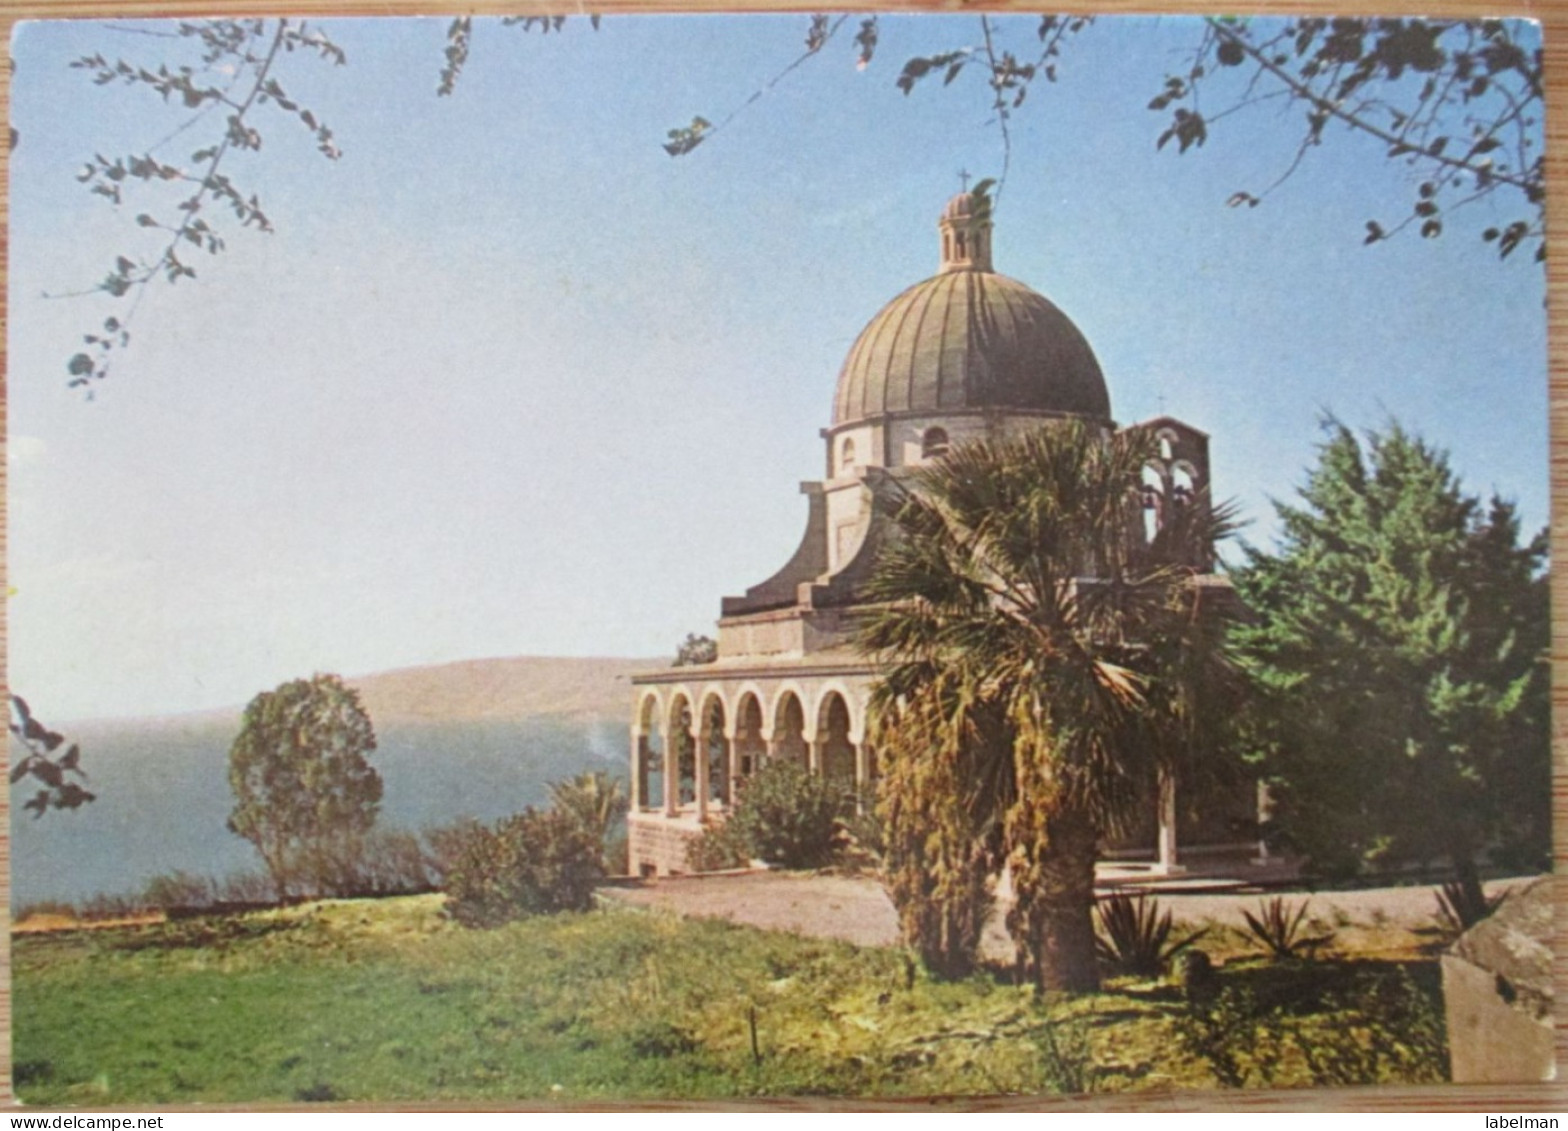 ISRAEL TIBERIAS GALILEE SEA CHURCH BEATITUDES MOUNT POSTCARD CARTE POSTALE ANSICHTSKARTE CARTOLINA KARTE CARD PC - Israel